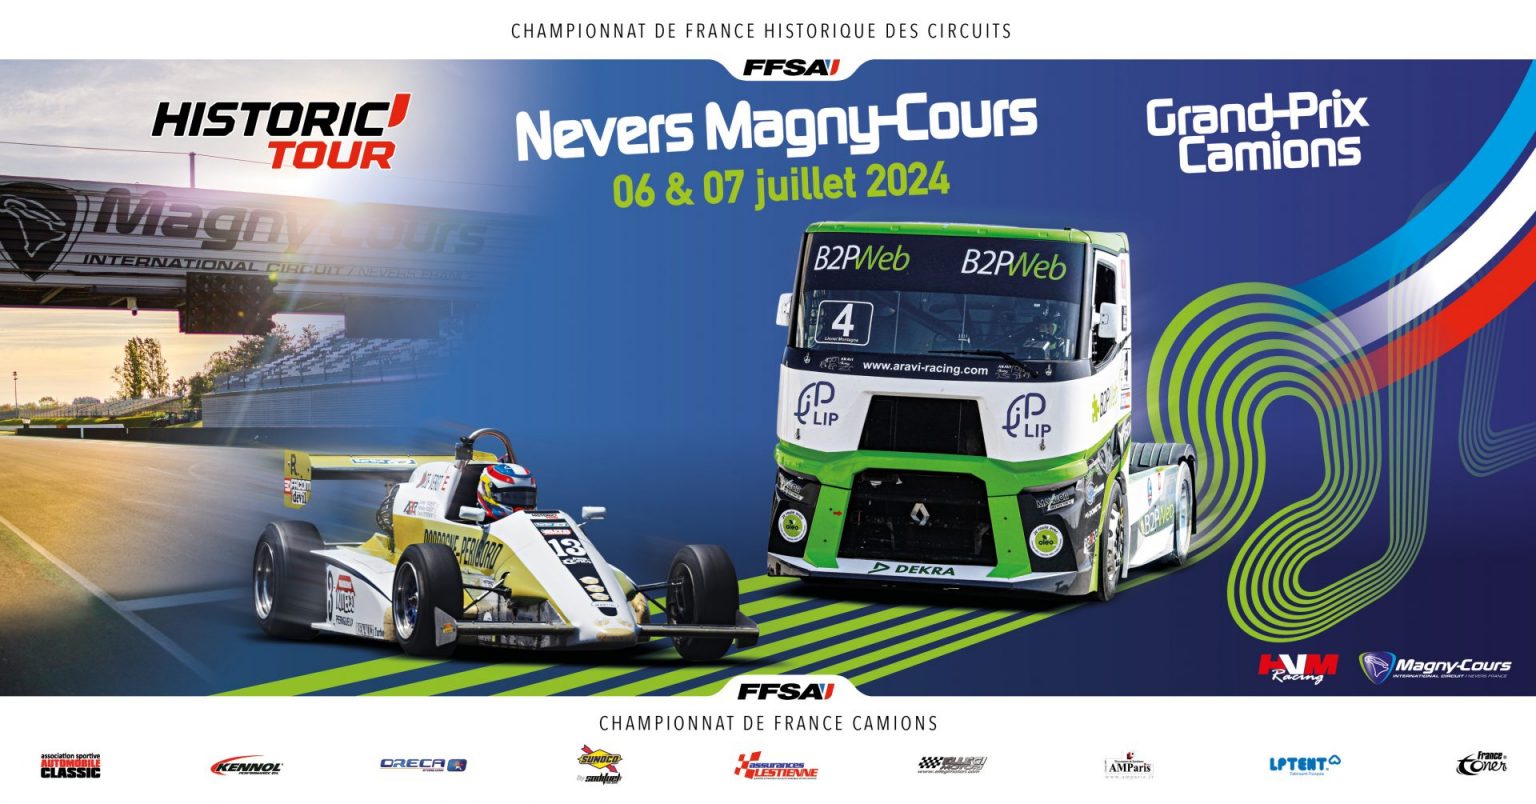 circuit de nevers magny-cours, Circuit de Nevers Magny-Cours